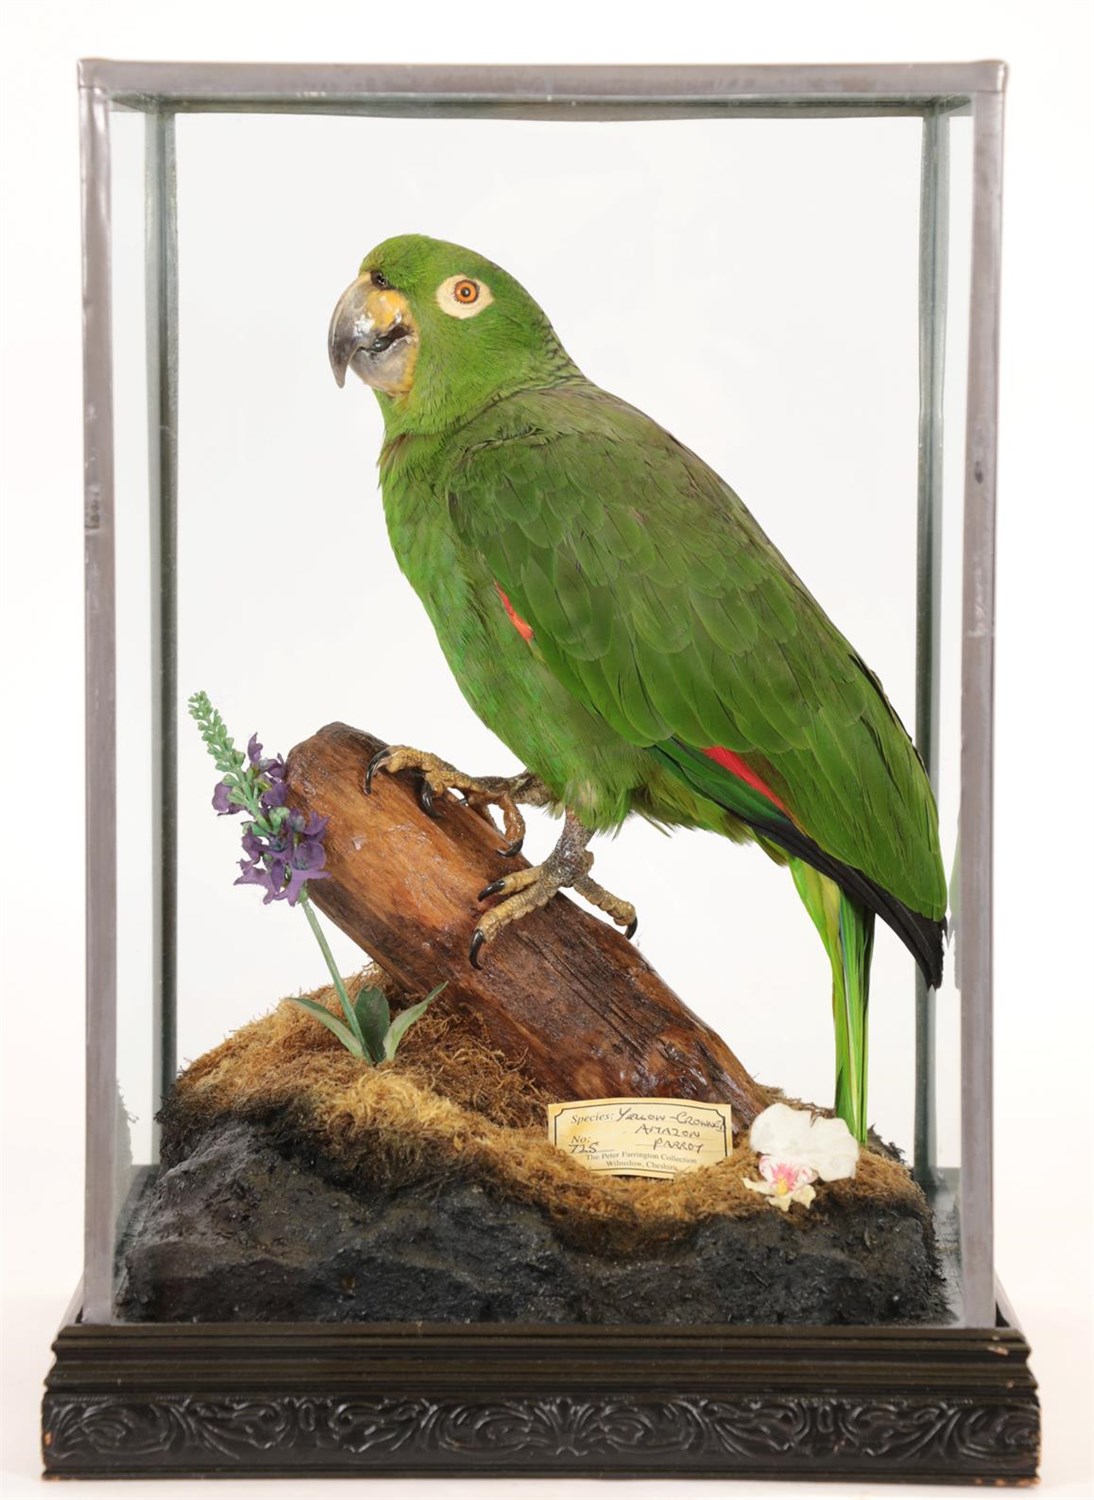 Lot 92 - Taxidermy: A Yellow-Crowned Amazon Parrot (Amazona ochrocephala), circa 1997, captive bred, by...